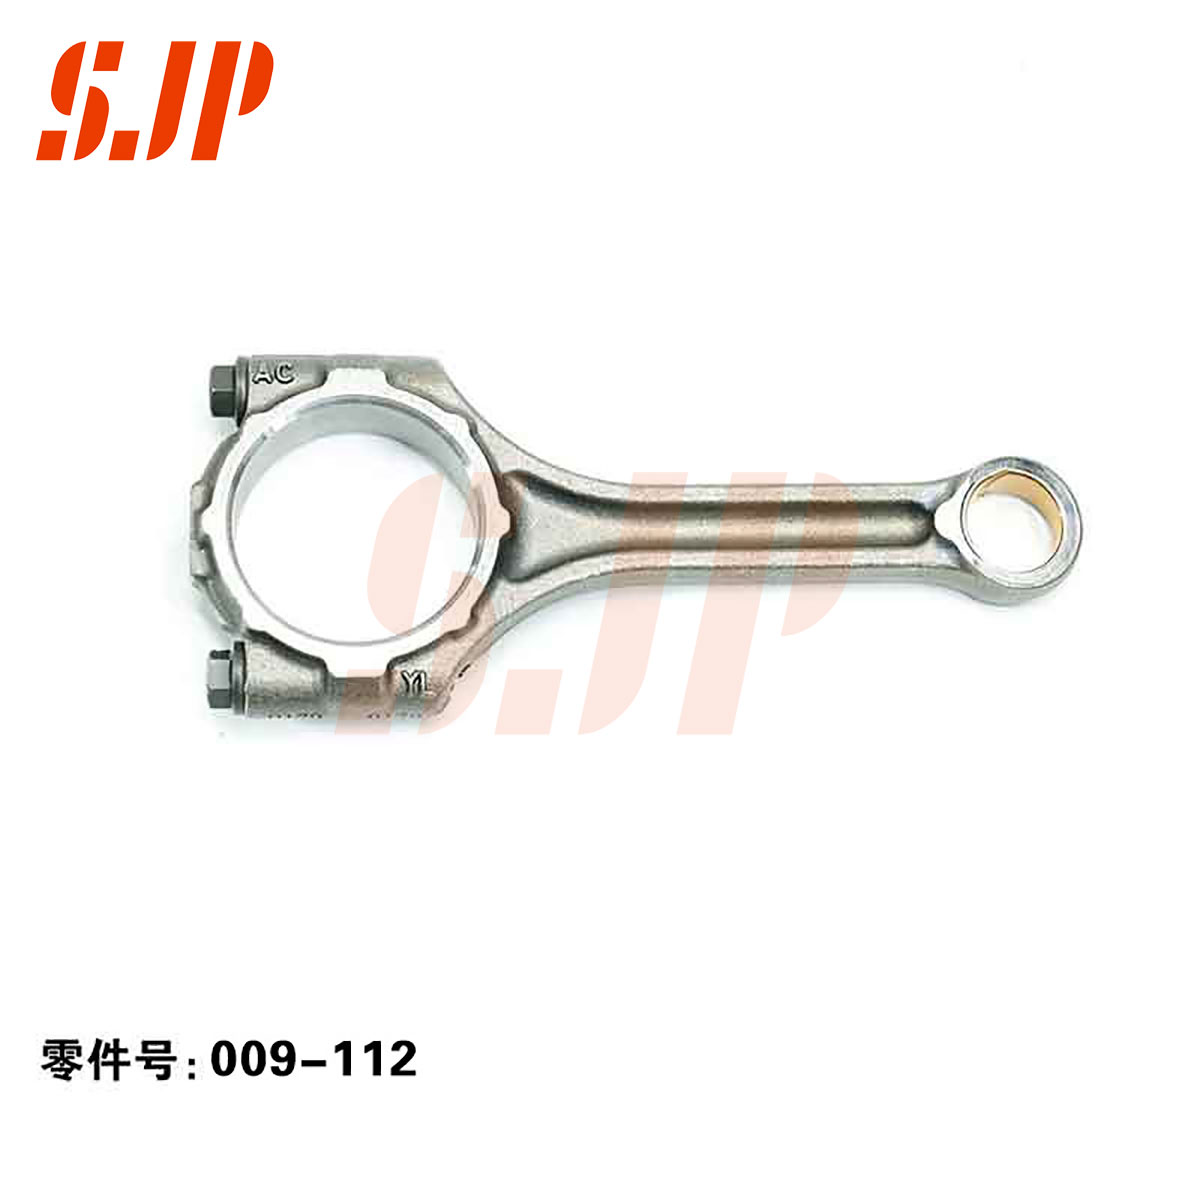 SJ-009-112 Connecting Rod For Baojun 1.5T